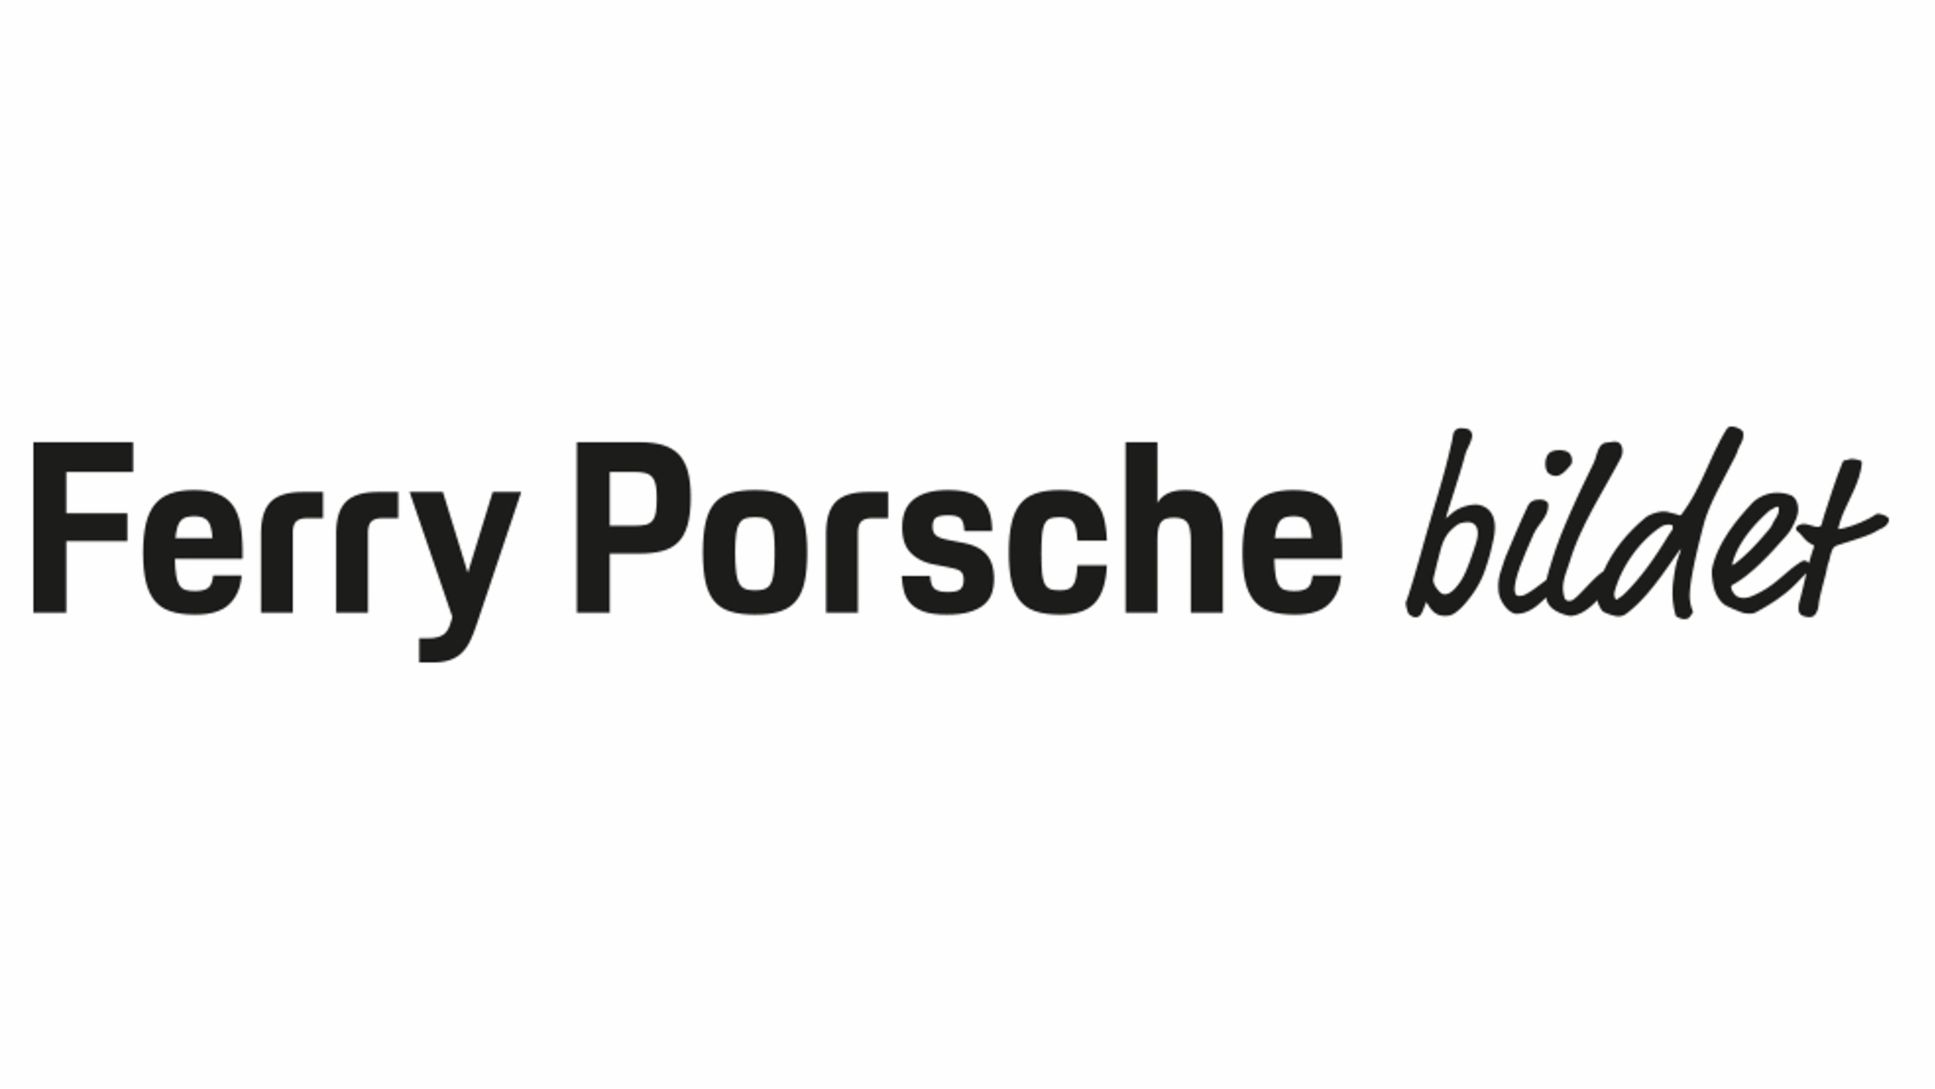 „Ferry Porsche bildet“, Bildungsinitiative der Ferry-Porsche-Stiftung, 2019, Porsche AG